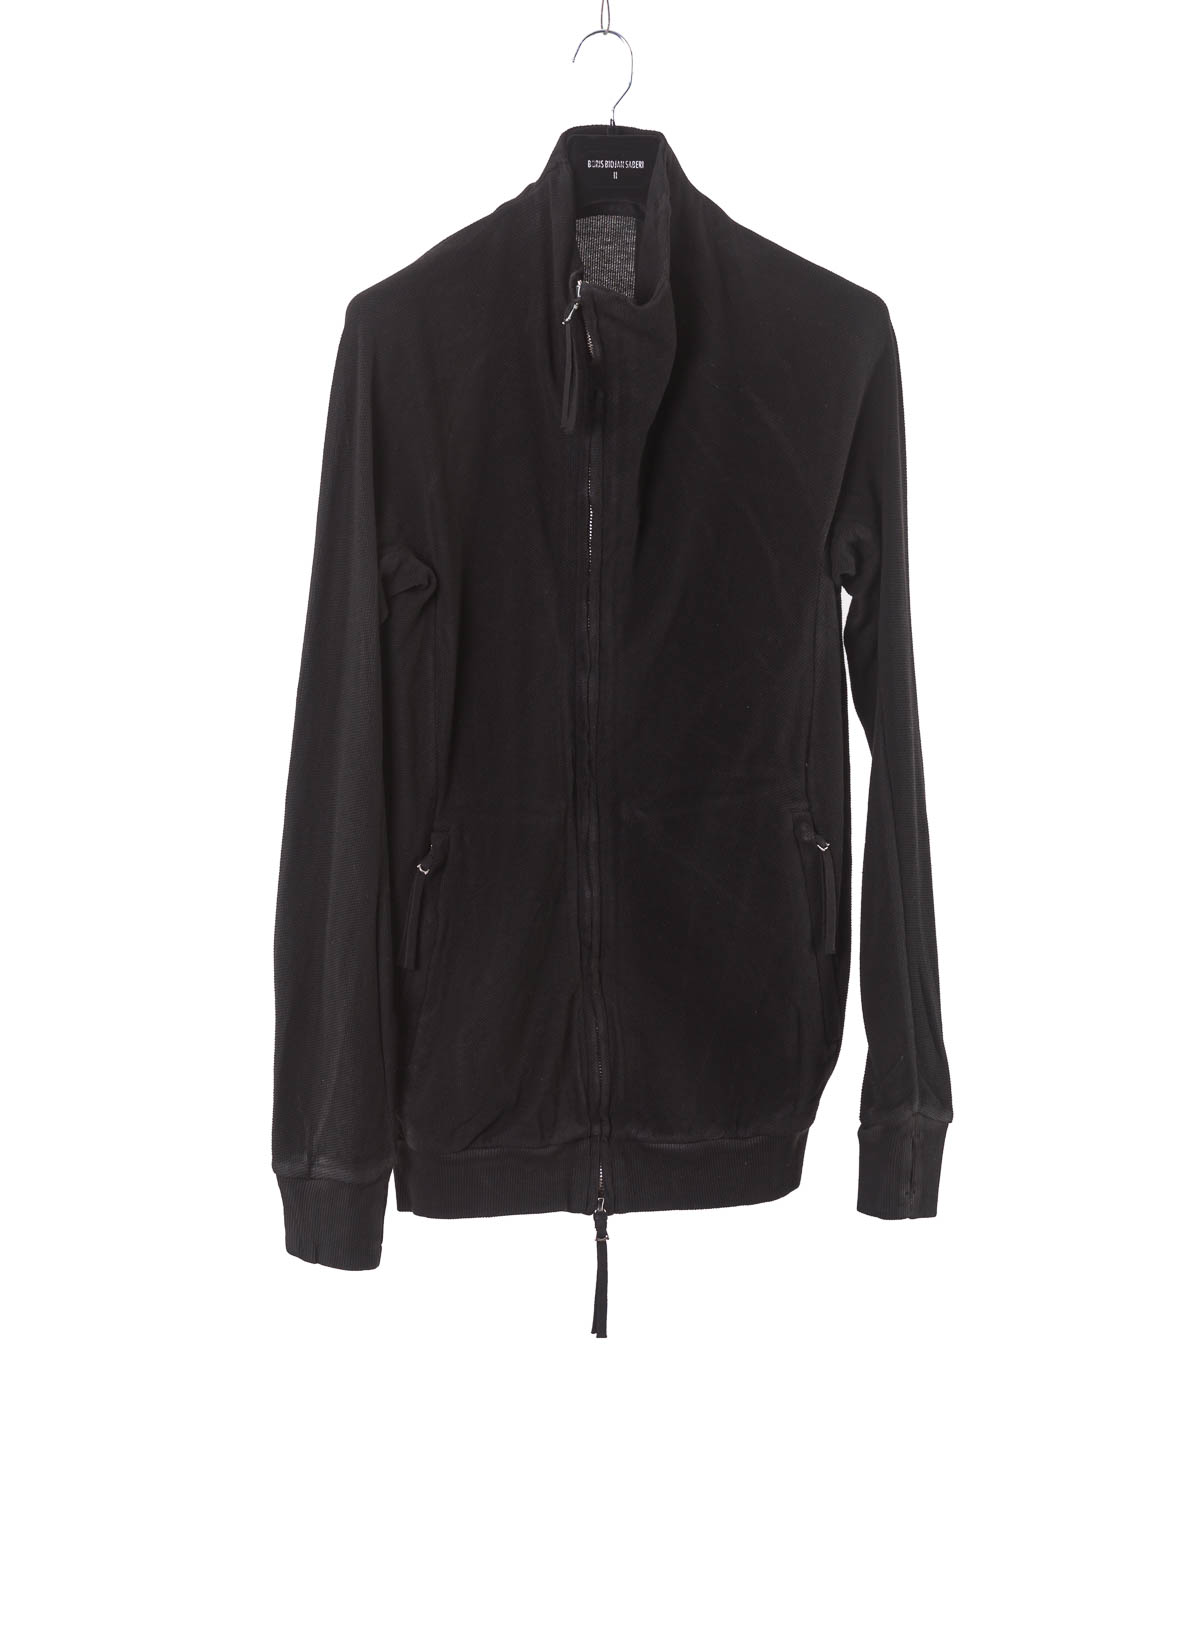 hide-m | Boris Bidjan Saberi men jacket ZIPPER1, black cotton